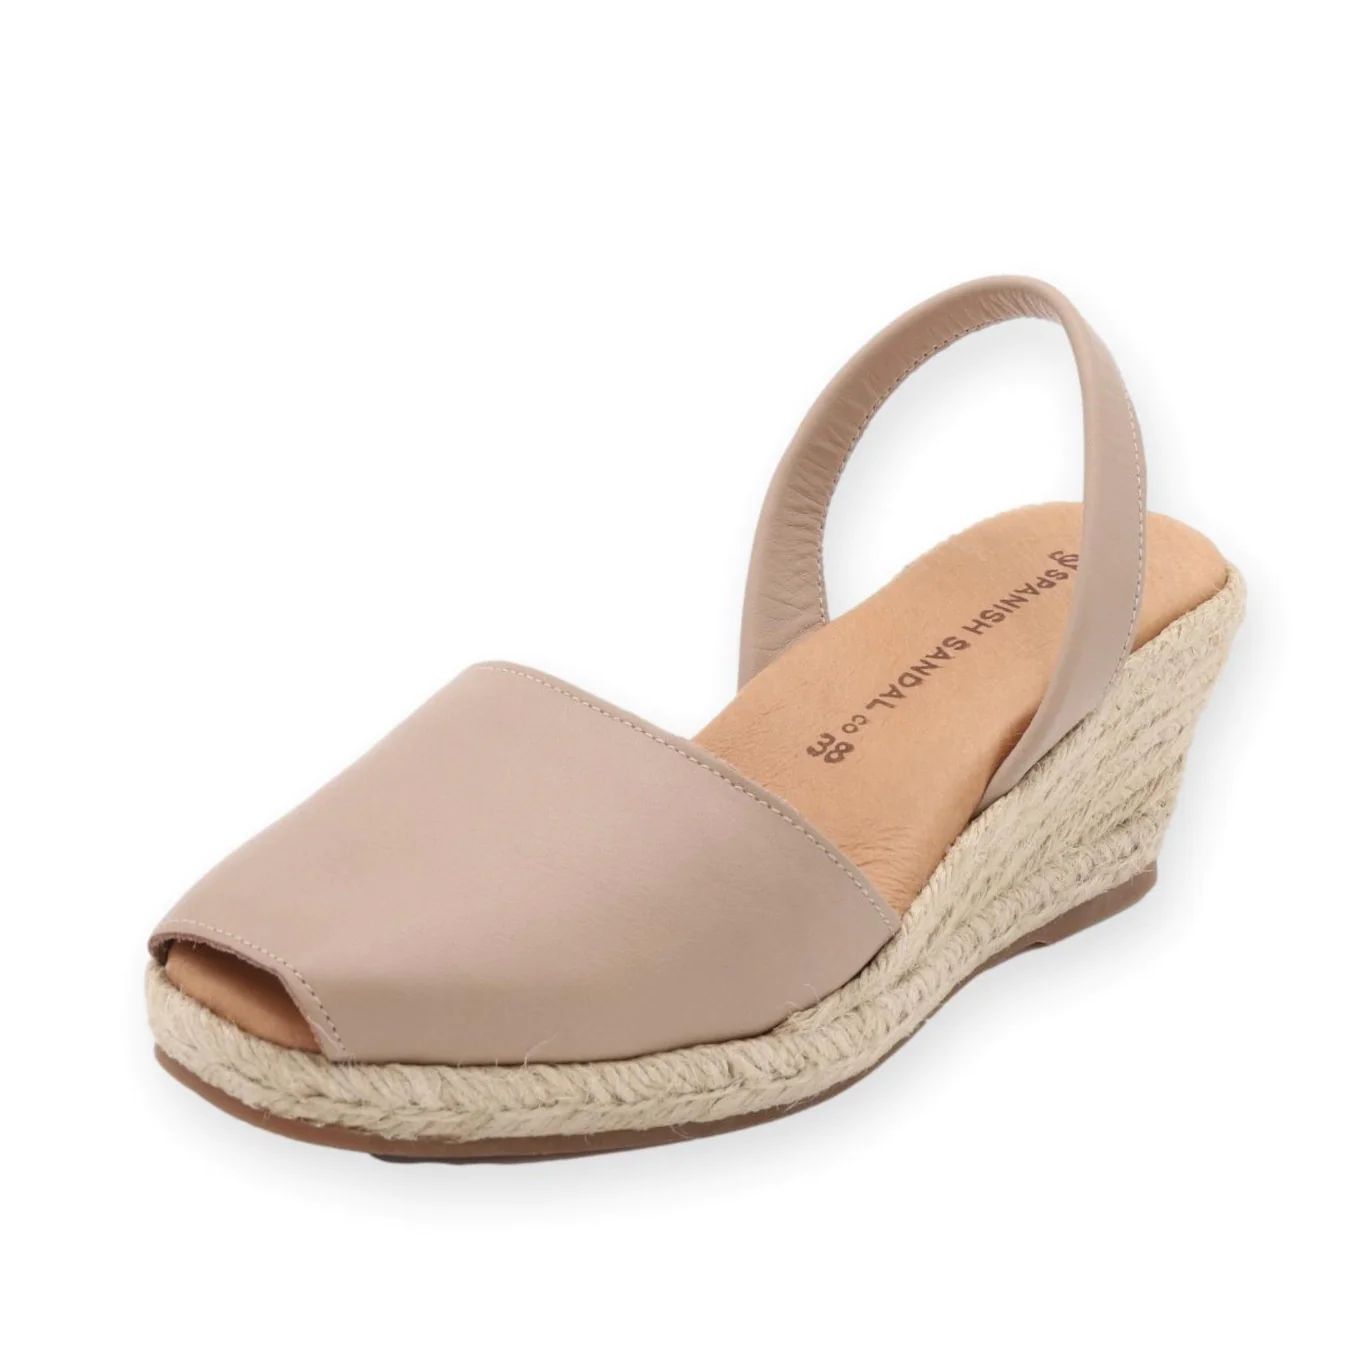 Linen espadrille wedges | The Spanish Sandal Company